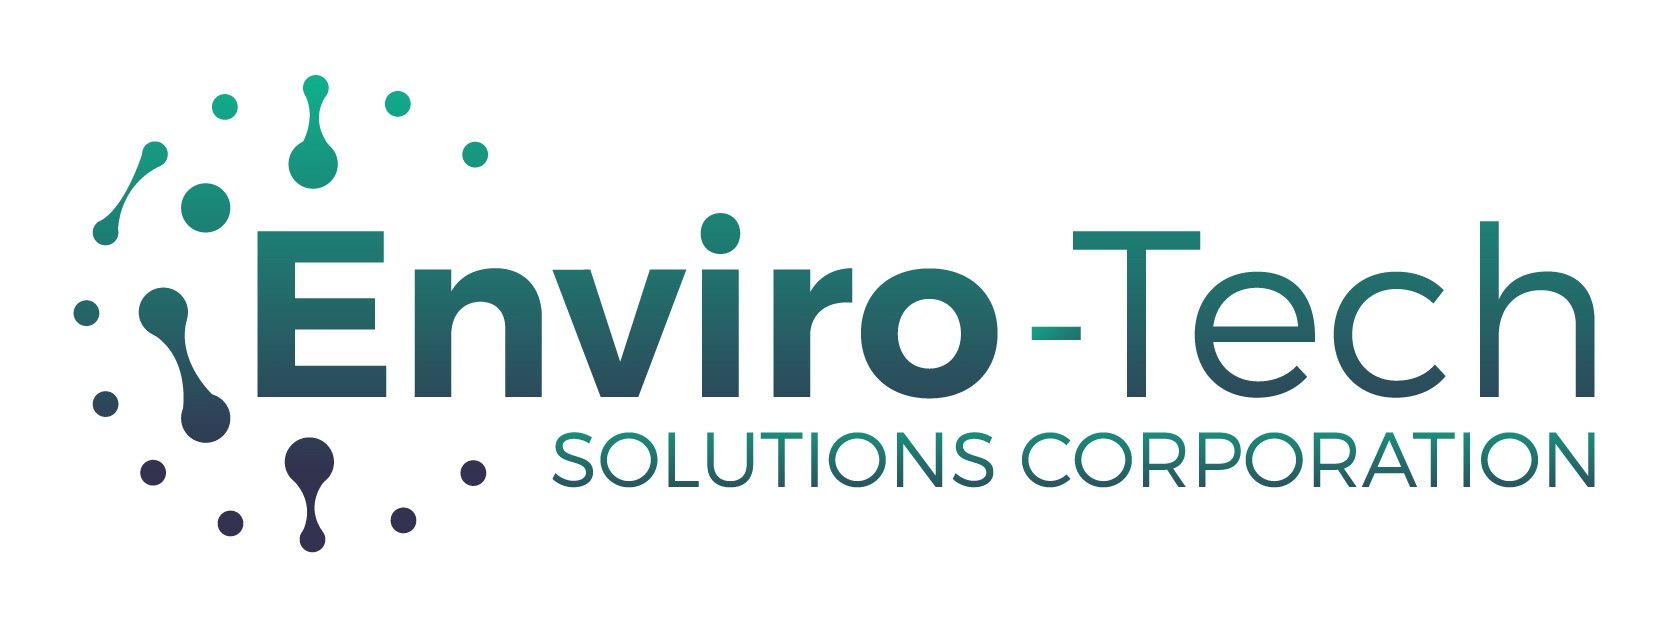  ENVIRO-TECH SOLUTIONS CORPORATION